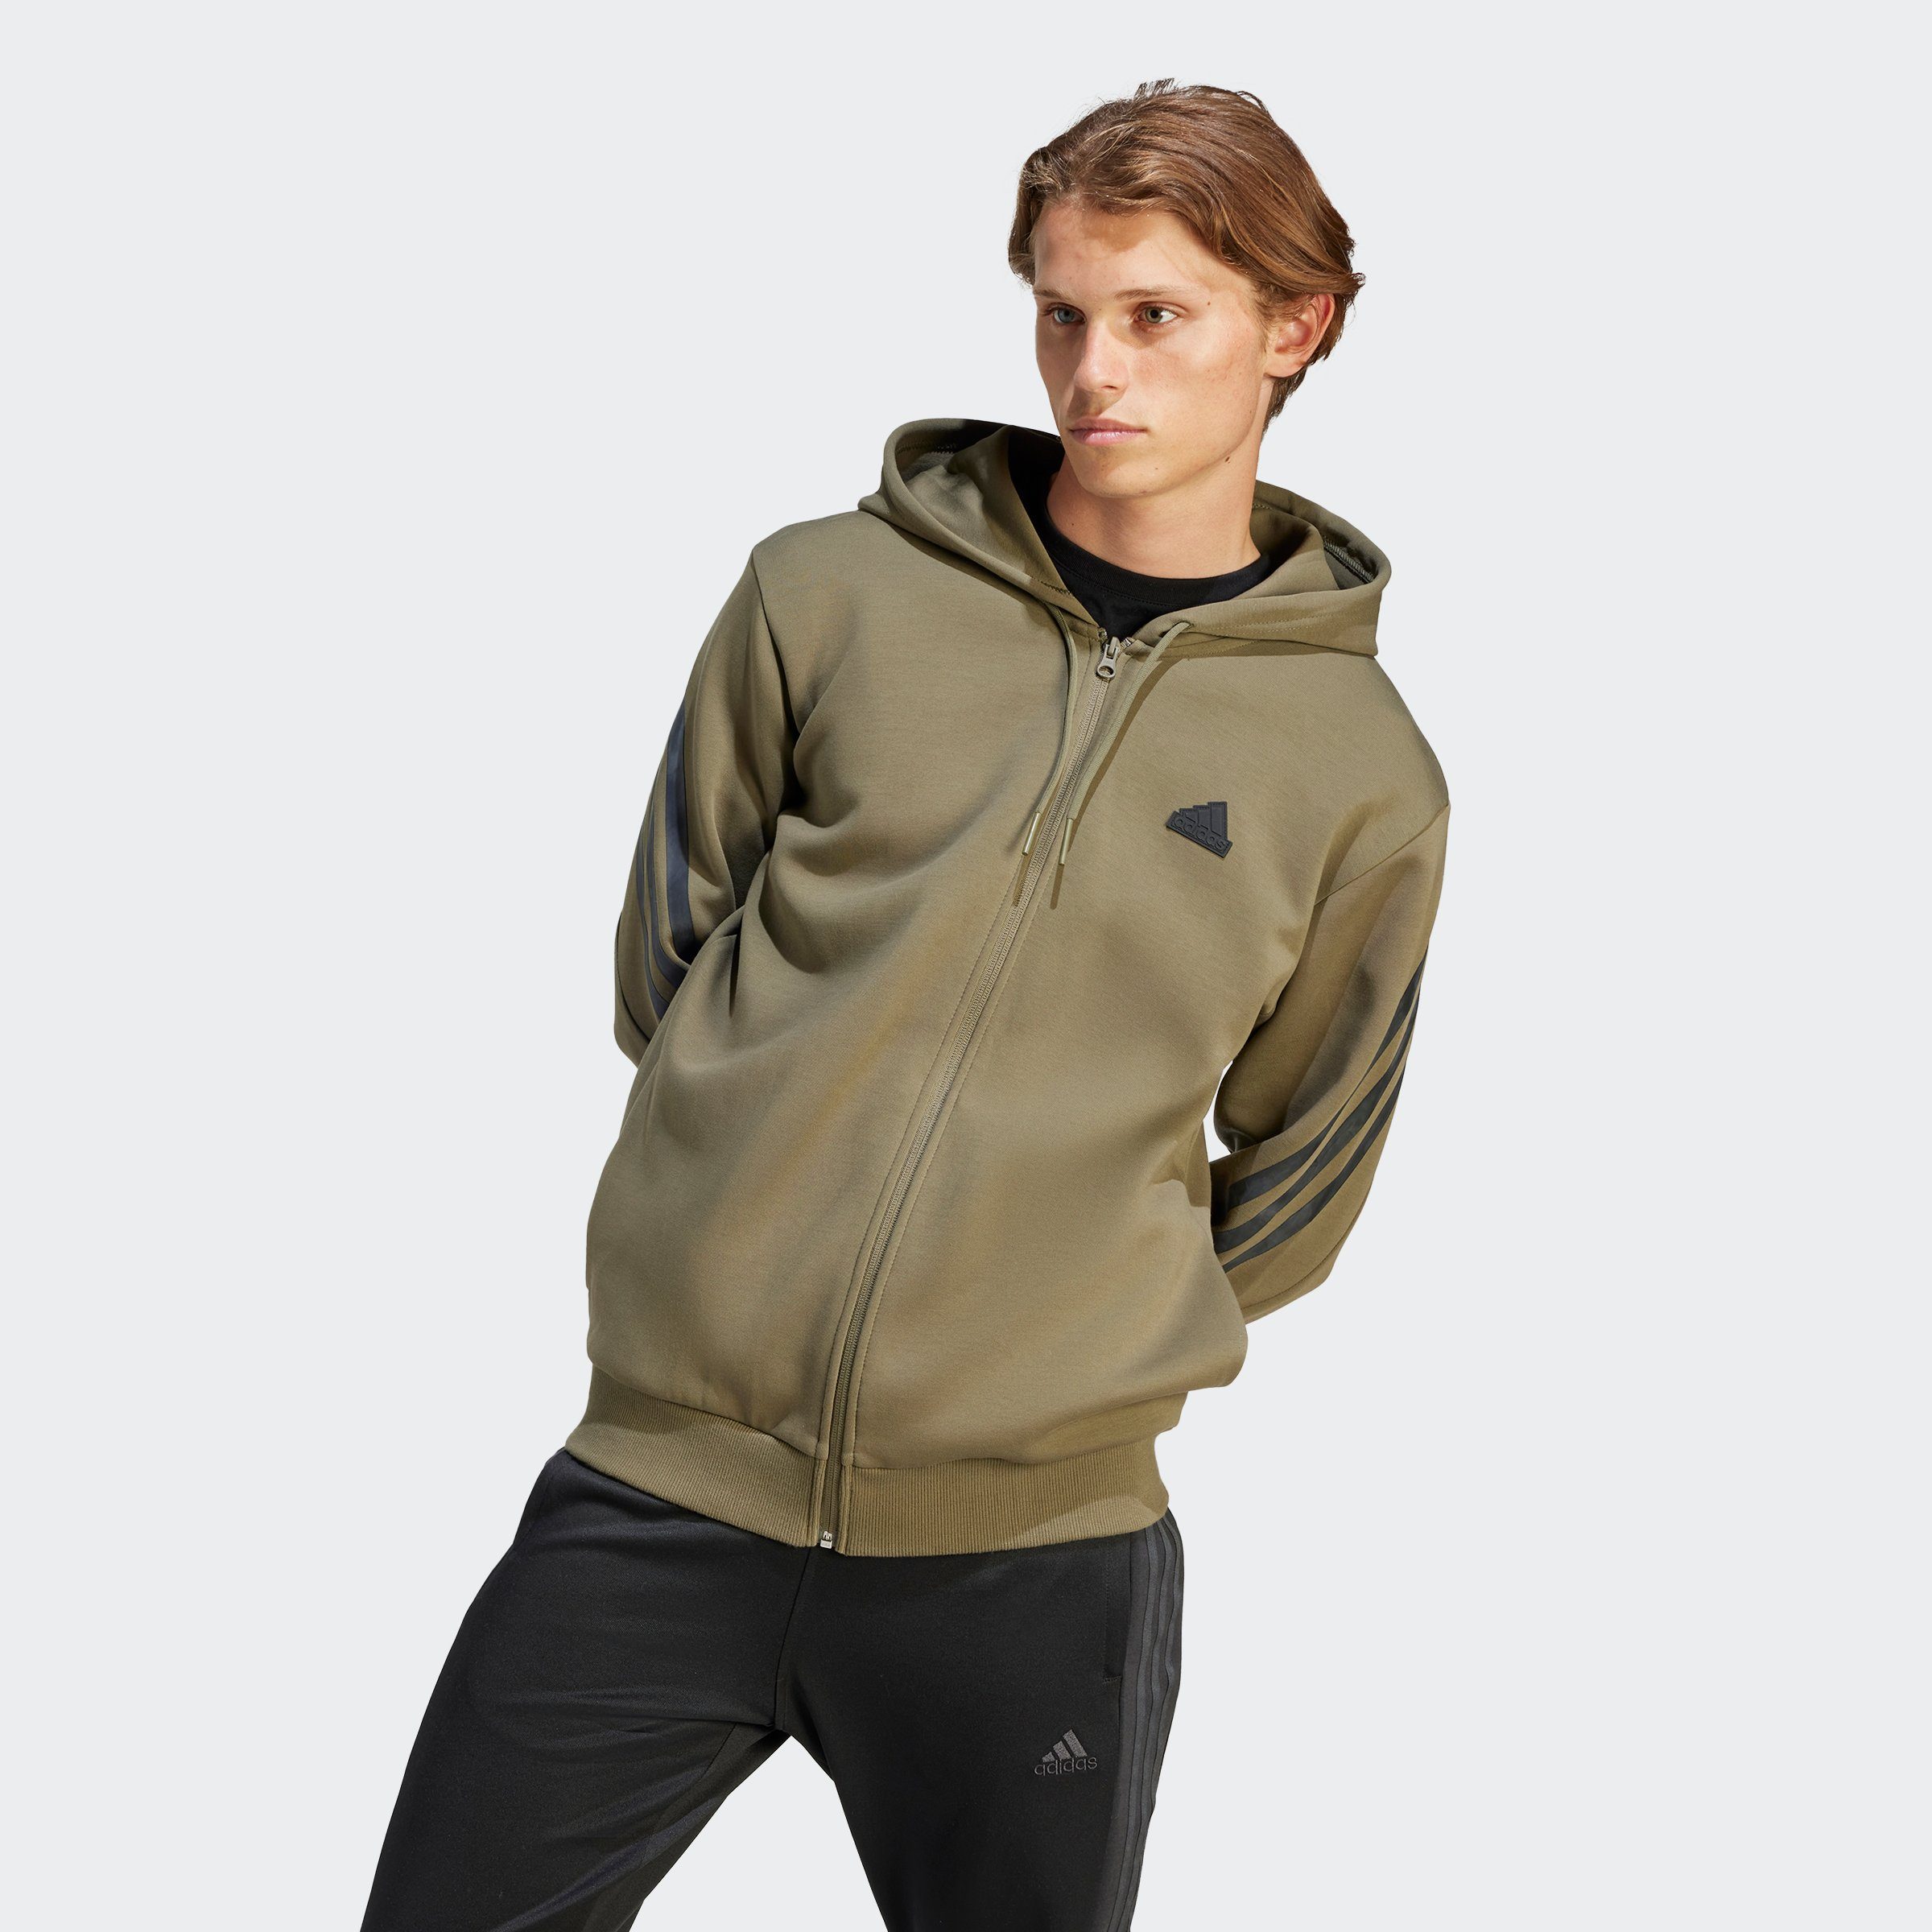 FUTURE KAPUZENJACKE Sweatshirt ICONS Sportswear OLISTR 3STREIFEN adidas